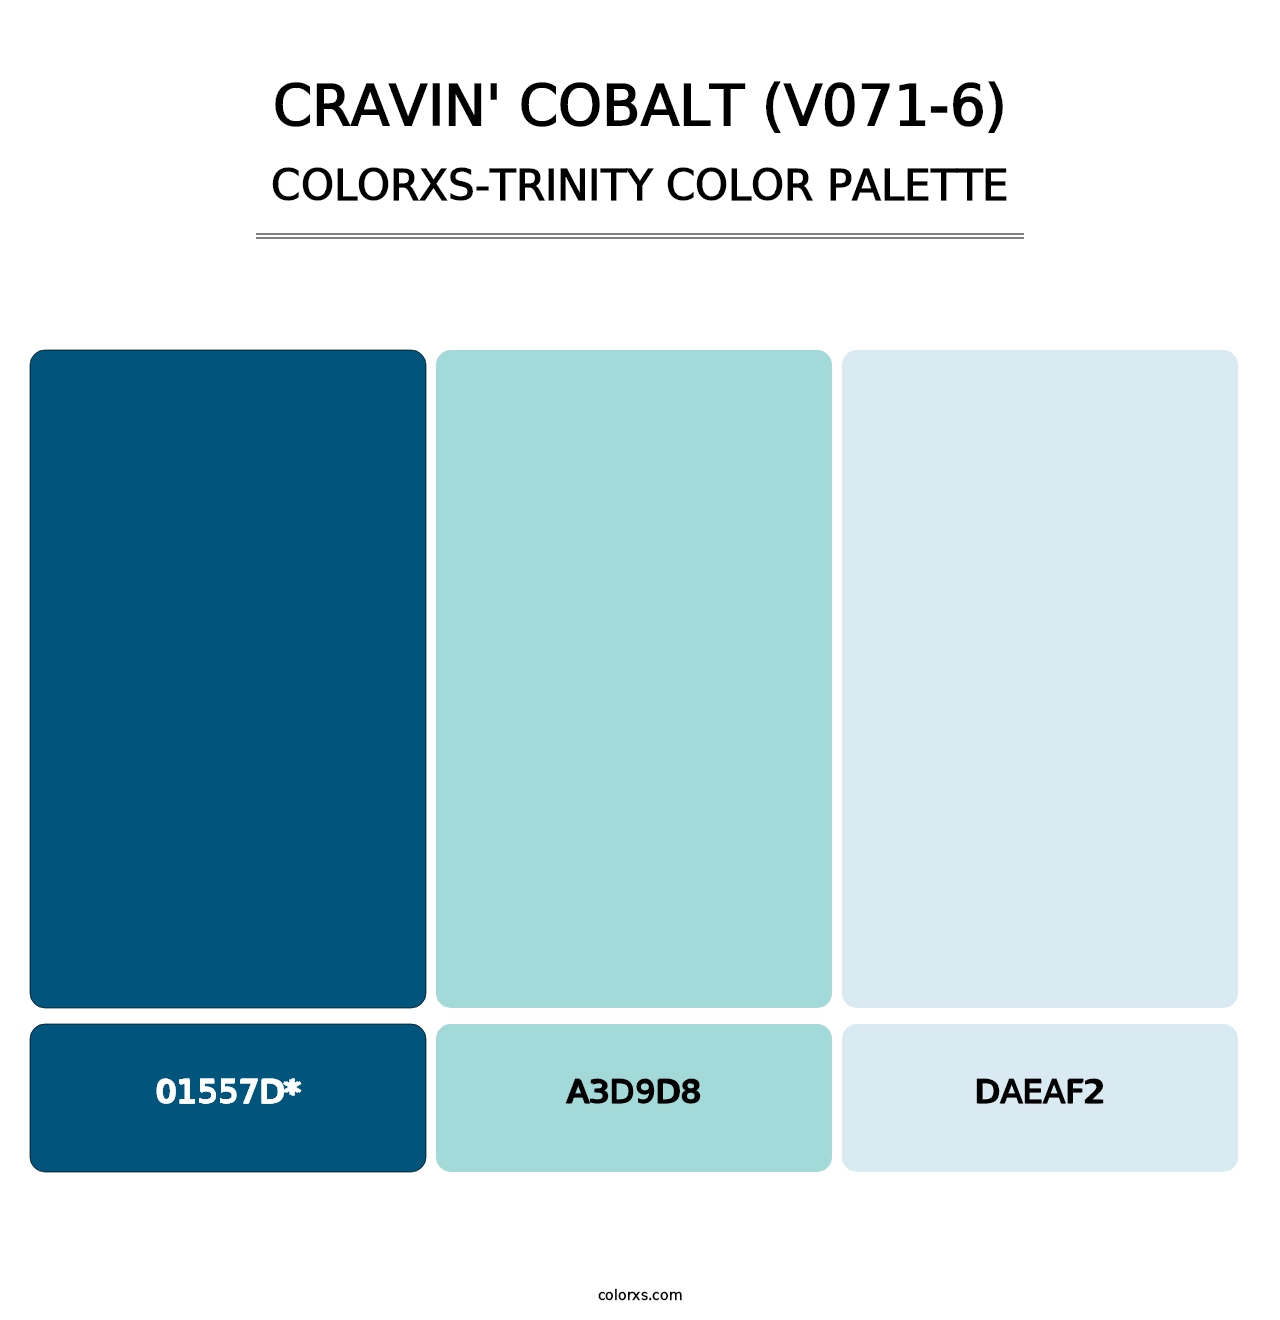 Cravin' Cobalt (V071-6) - Colorxs Trinity Palette